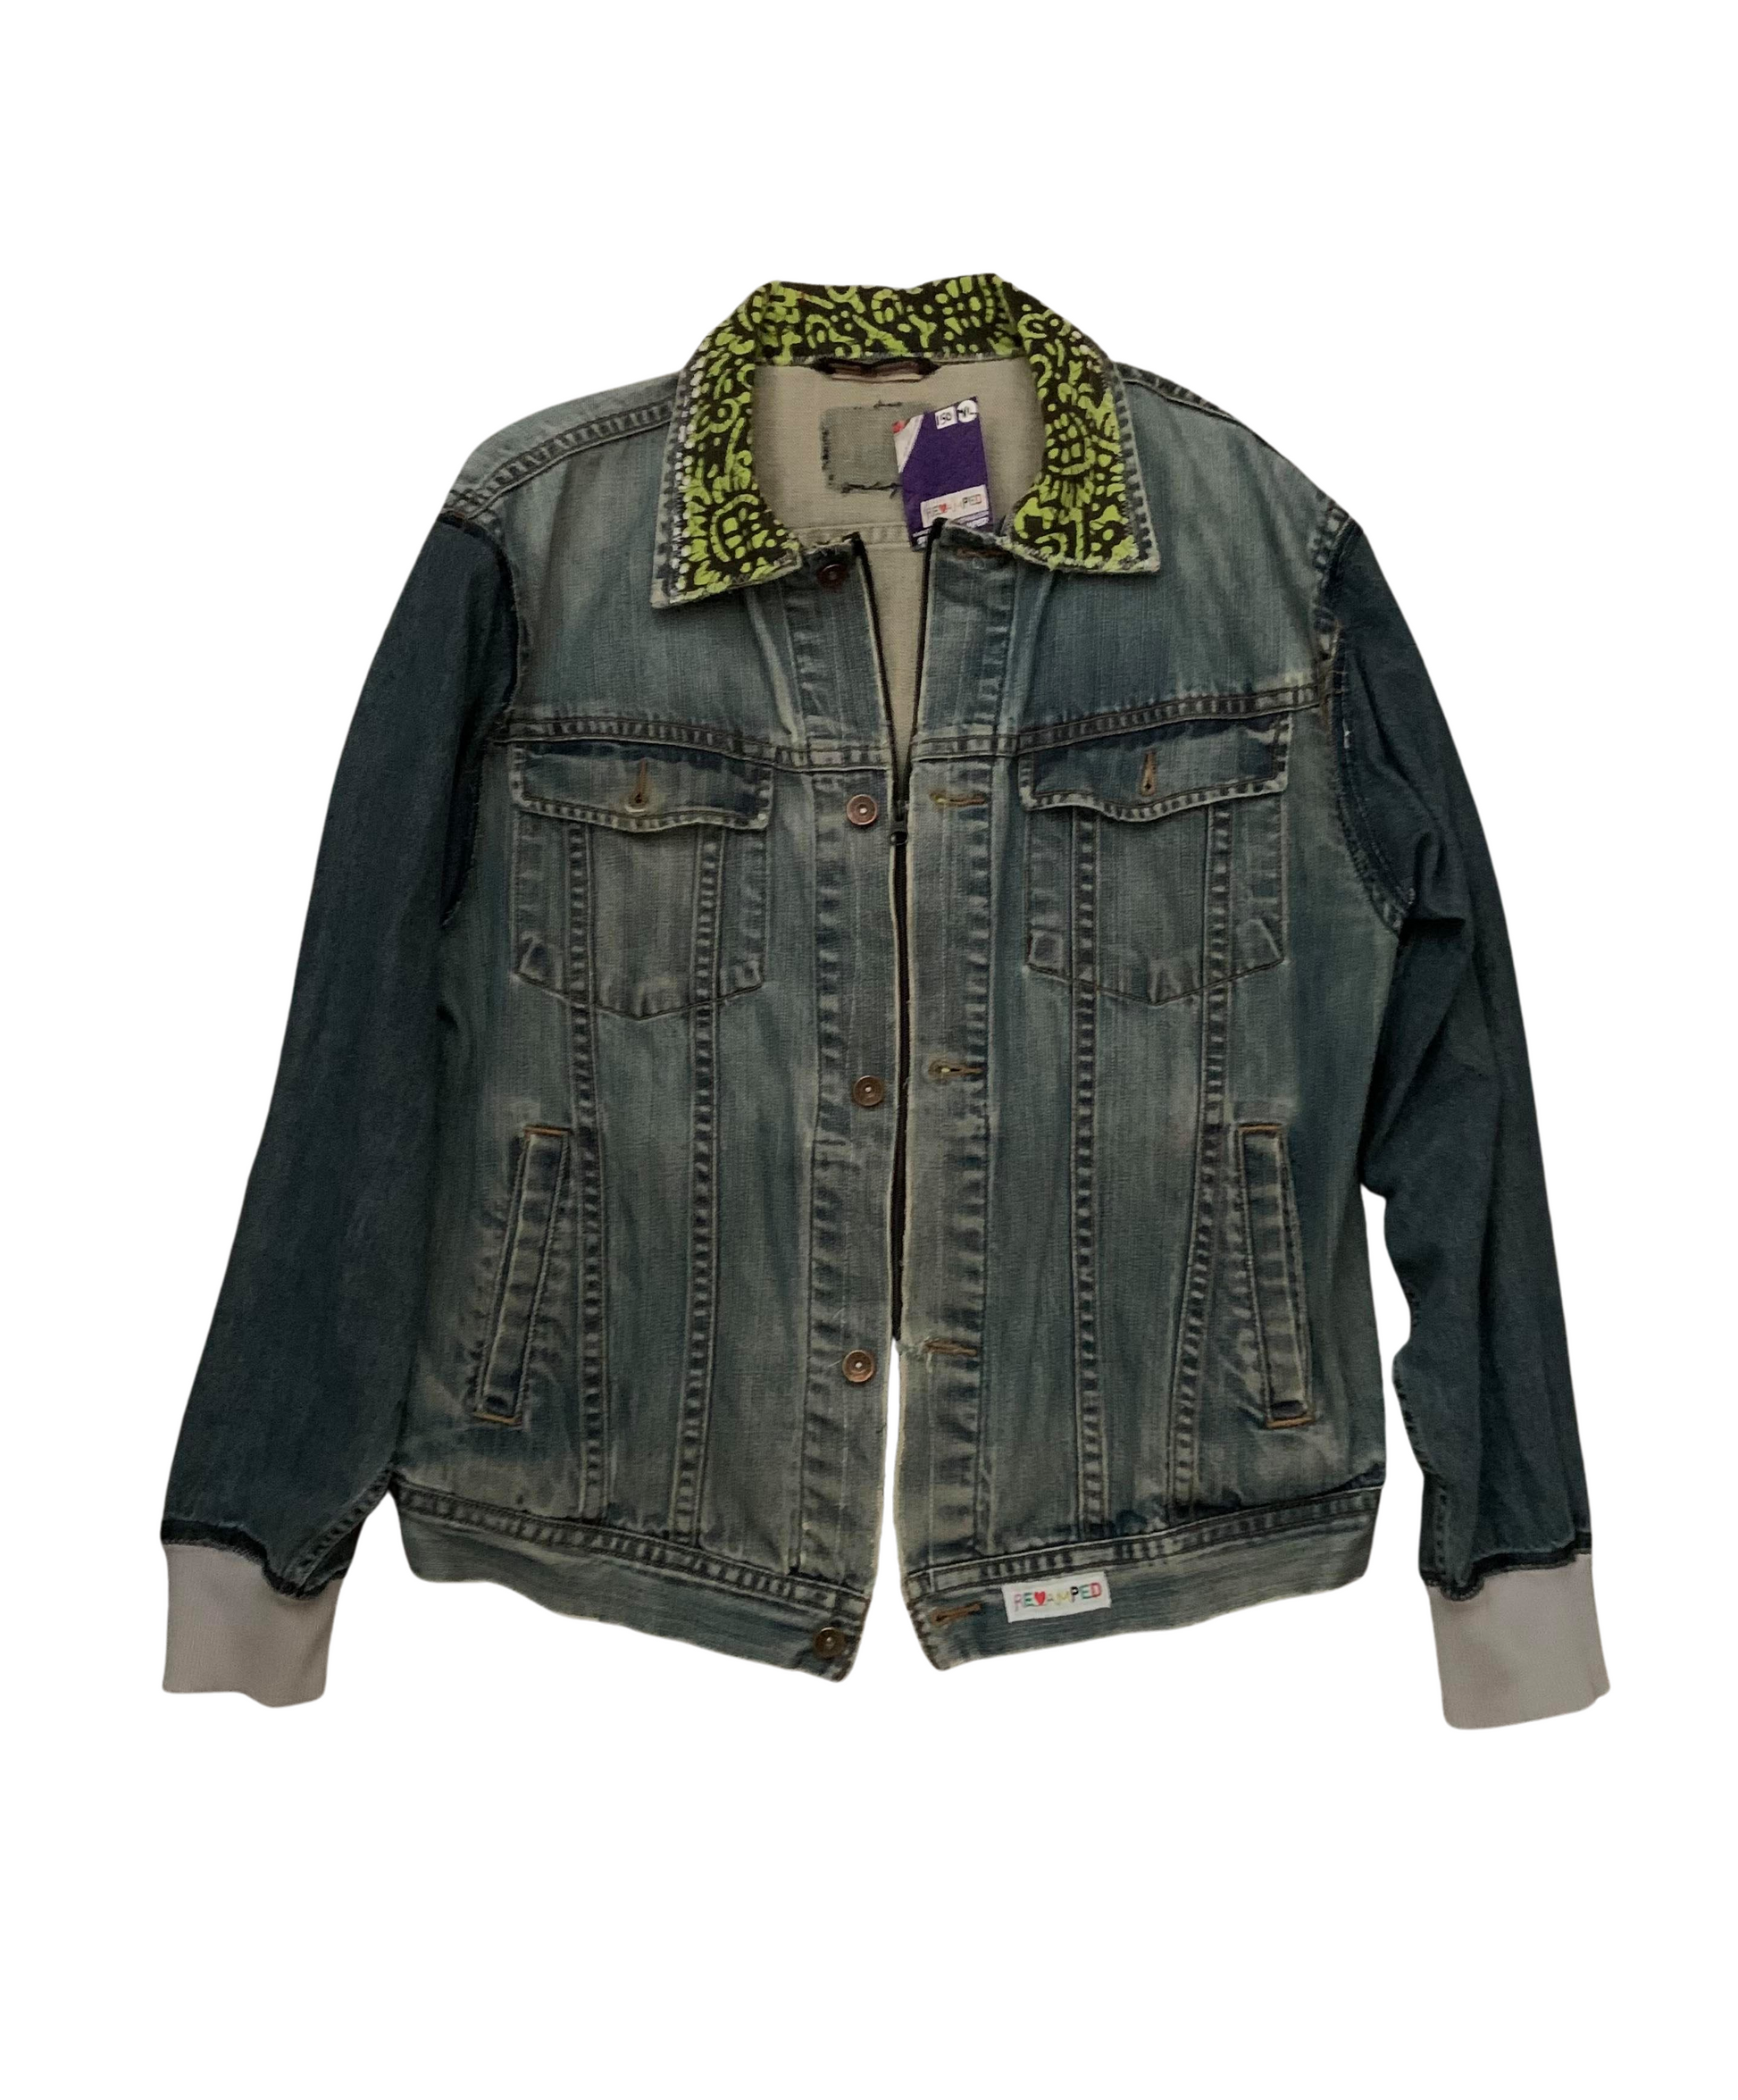 Revamped Clothing Toronto - Repurposed Upcycled Alterations Repairs Parkdale batik jean jacket